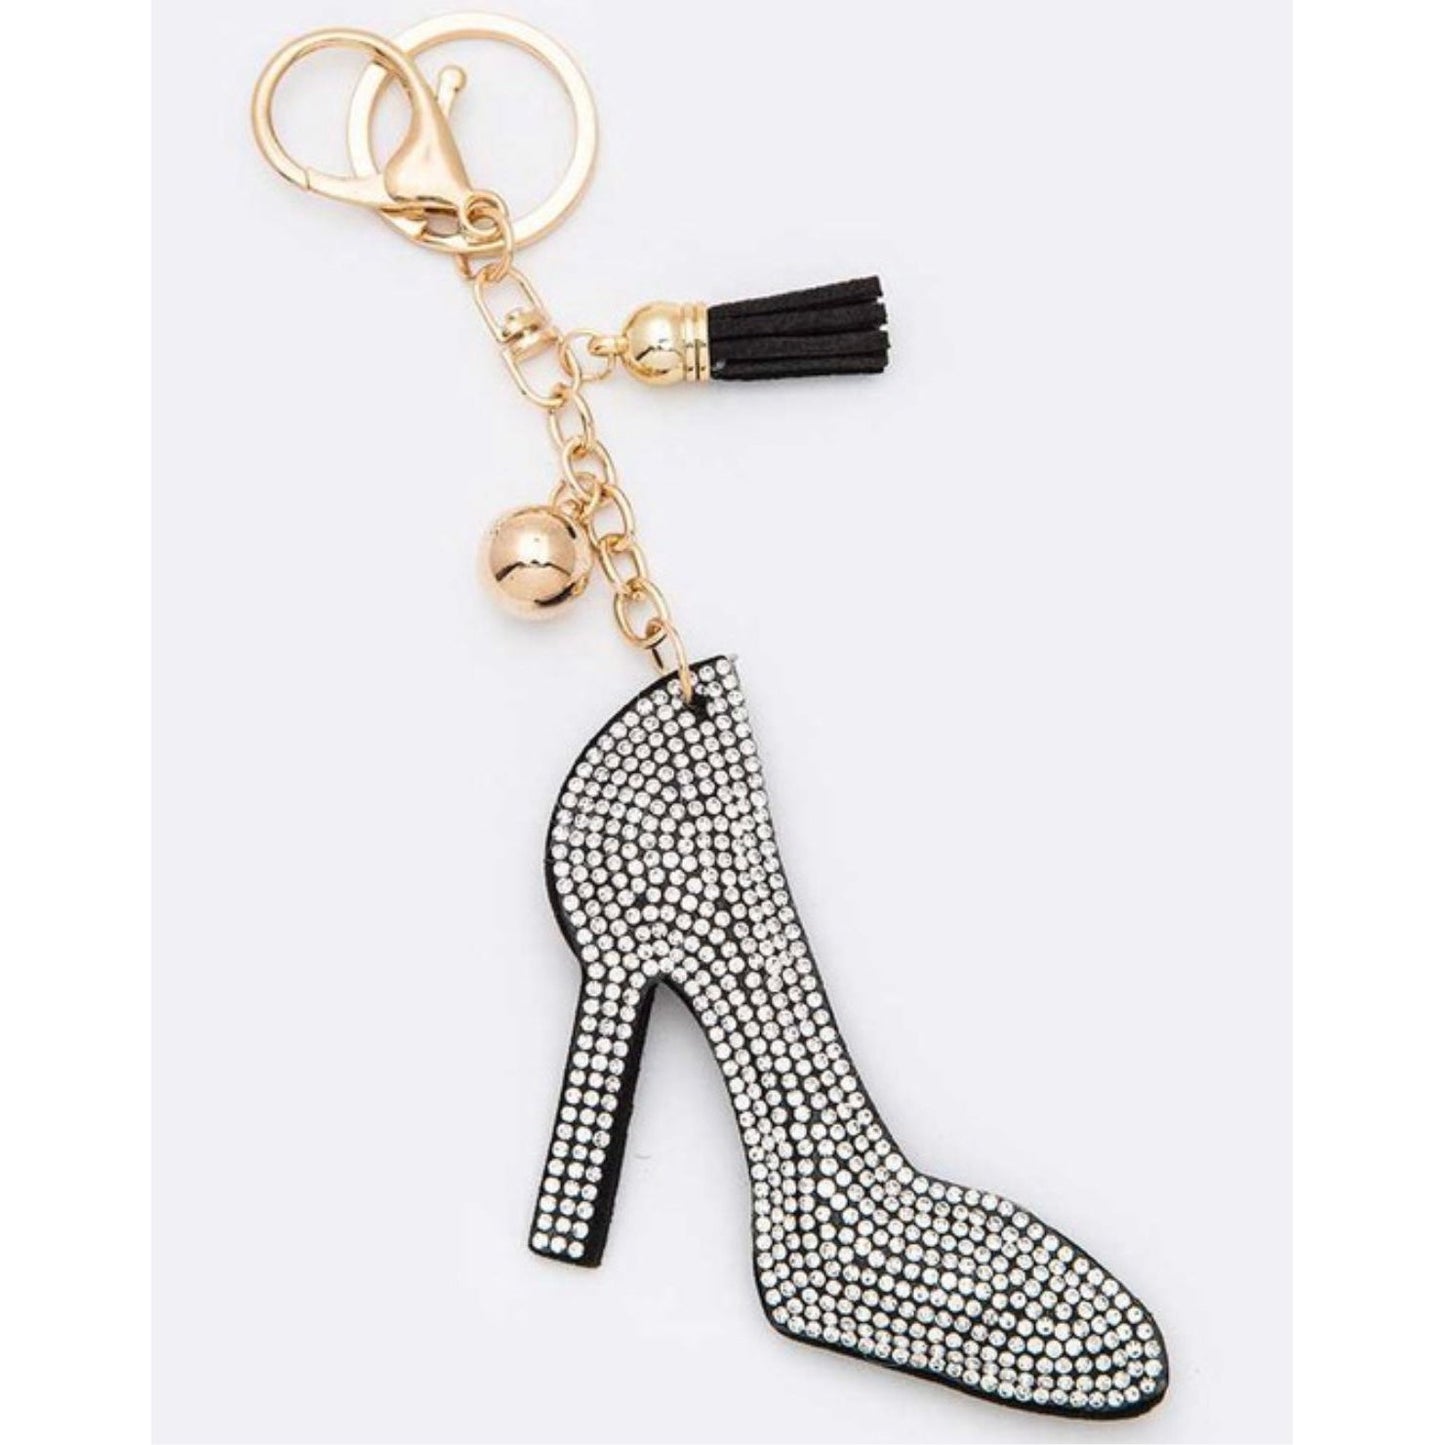 Crystal heel keychain with tassel.  Dimensions 2 1/2" x 2 1/2"